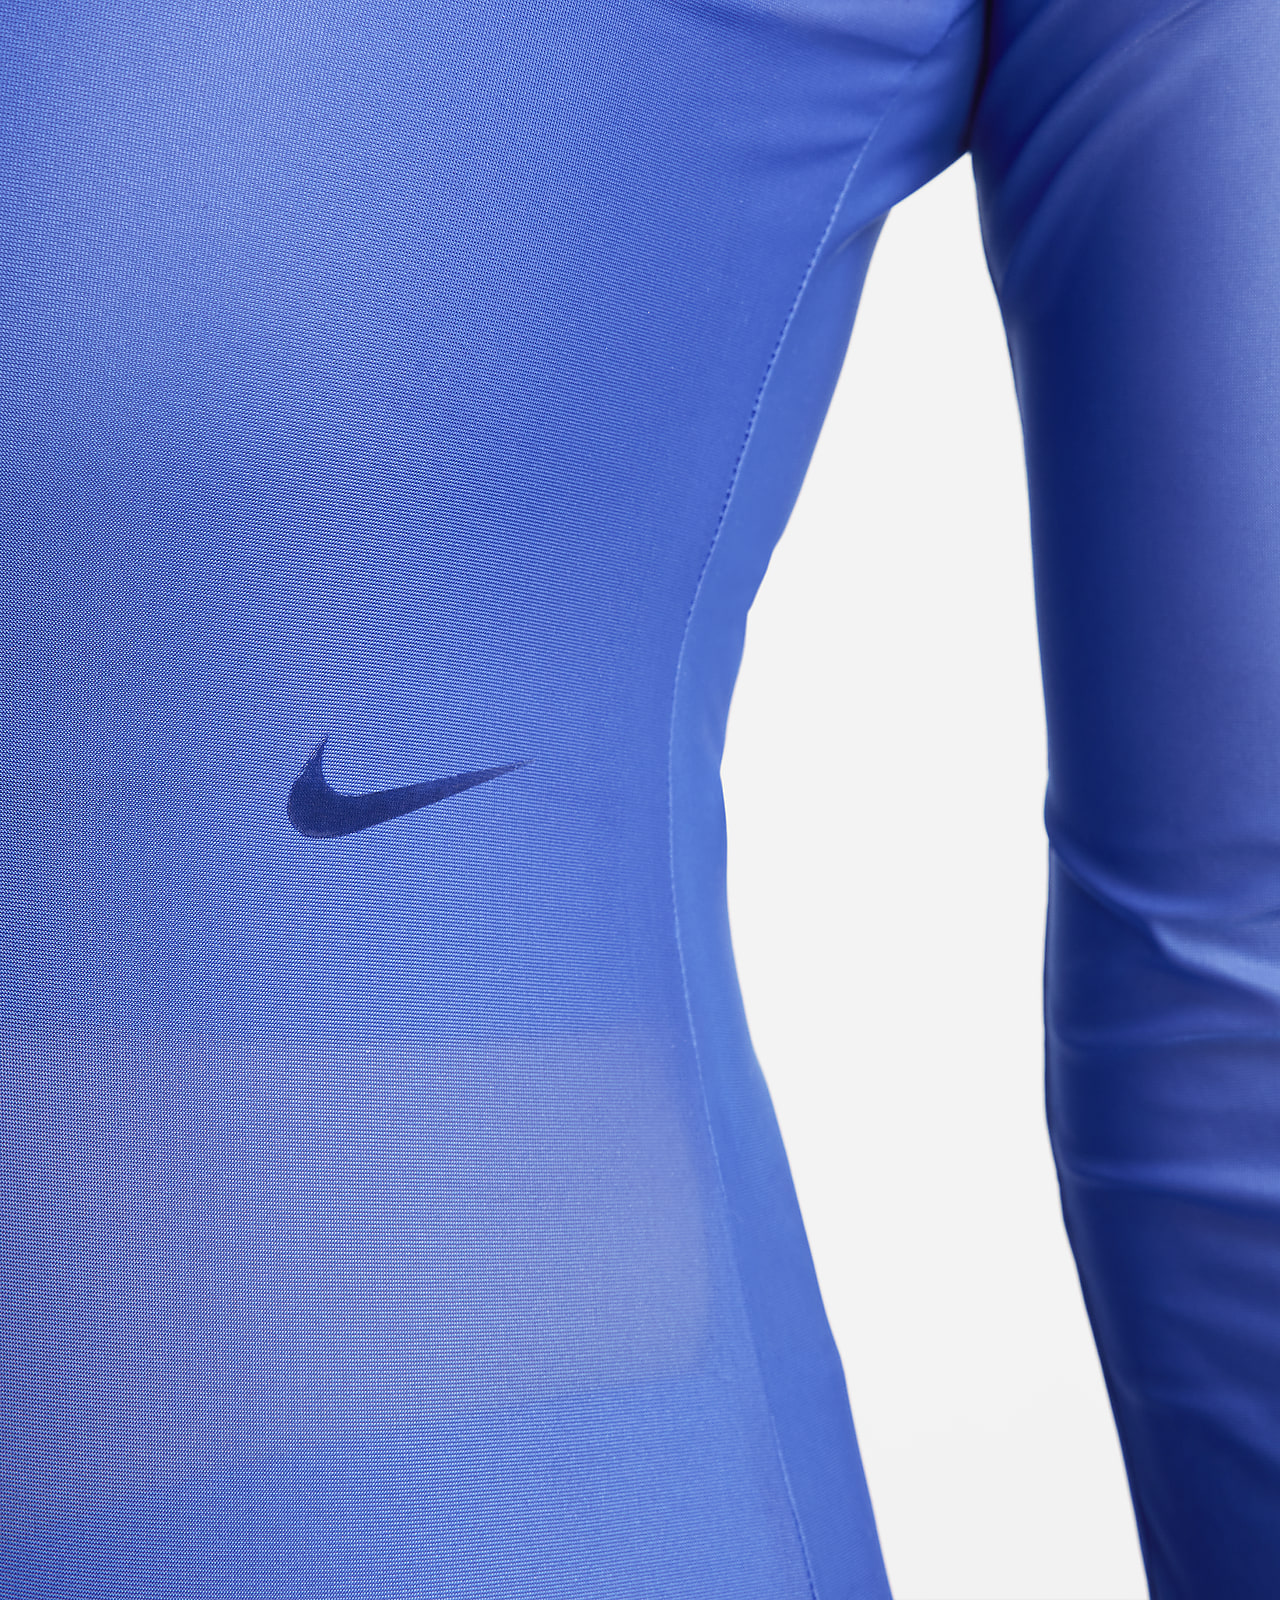 Nike FutureMove Women's Dri-FIT Long-Sleeve Sheer Top